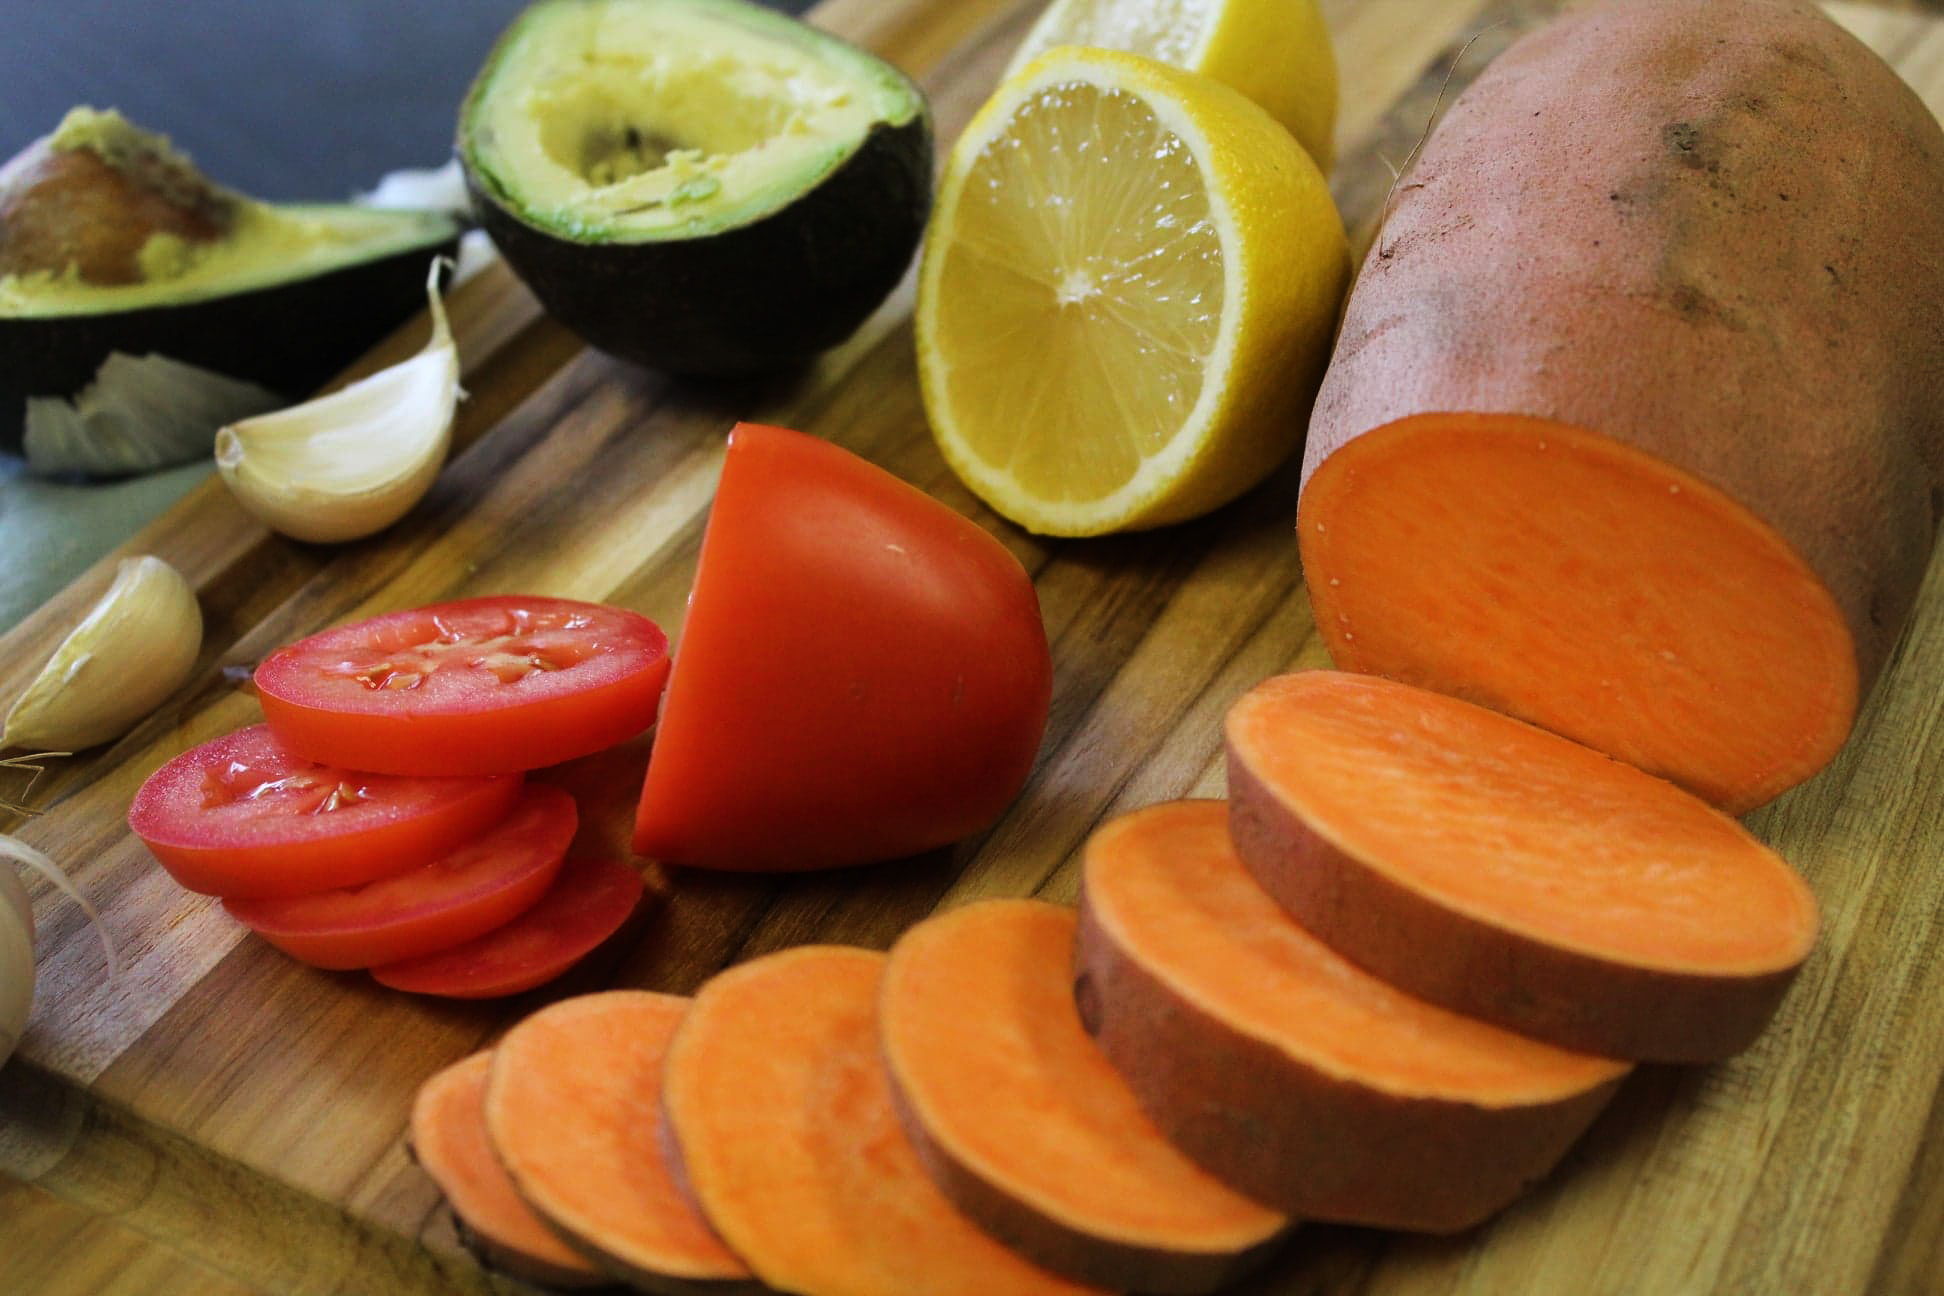 ingredients (sweet potato, tomato, garlic, lemon, avocado)